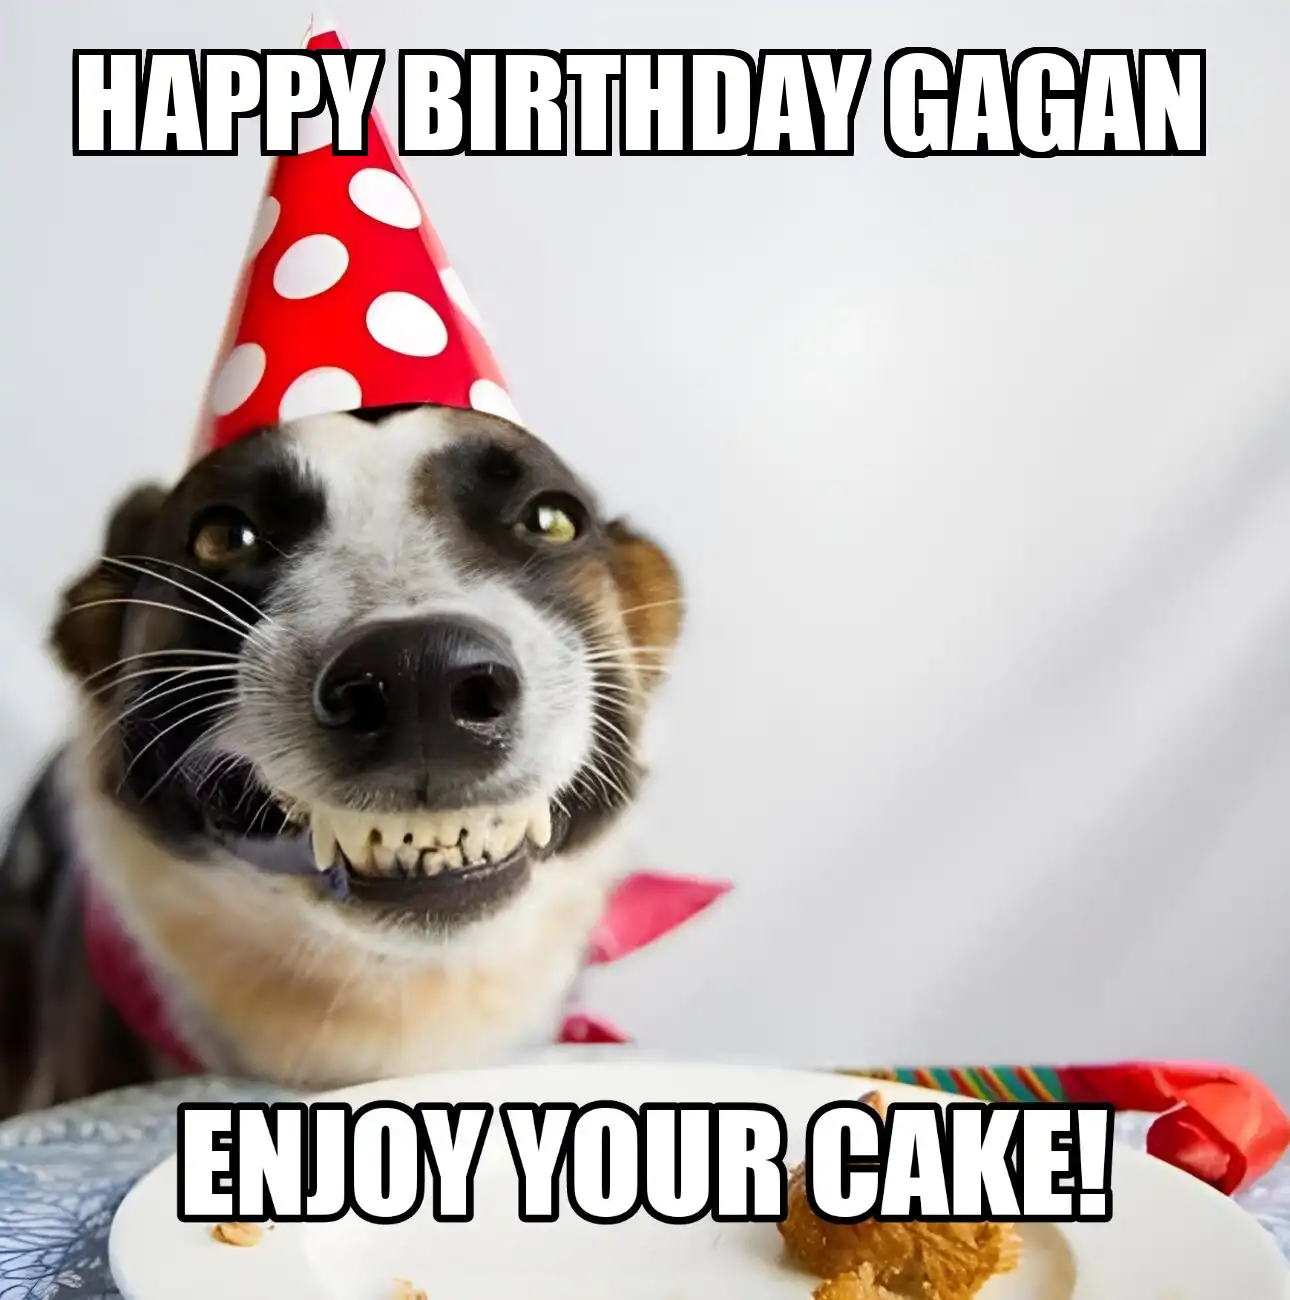 Happy Birthday Gagan Enjoy Your Cake Dog Meme